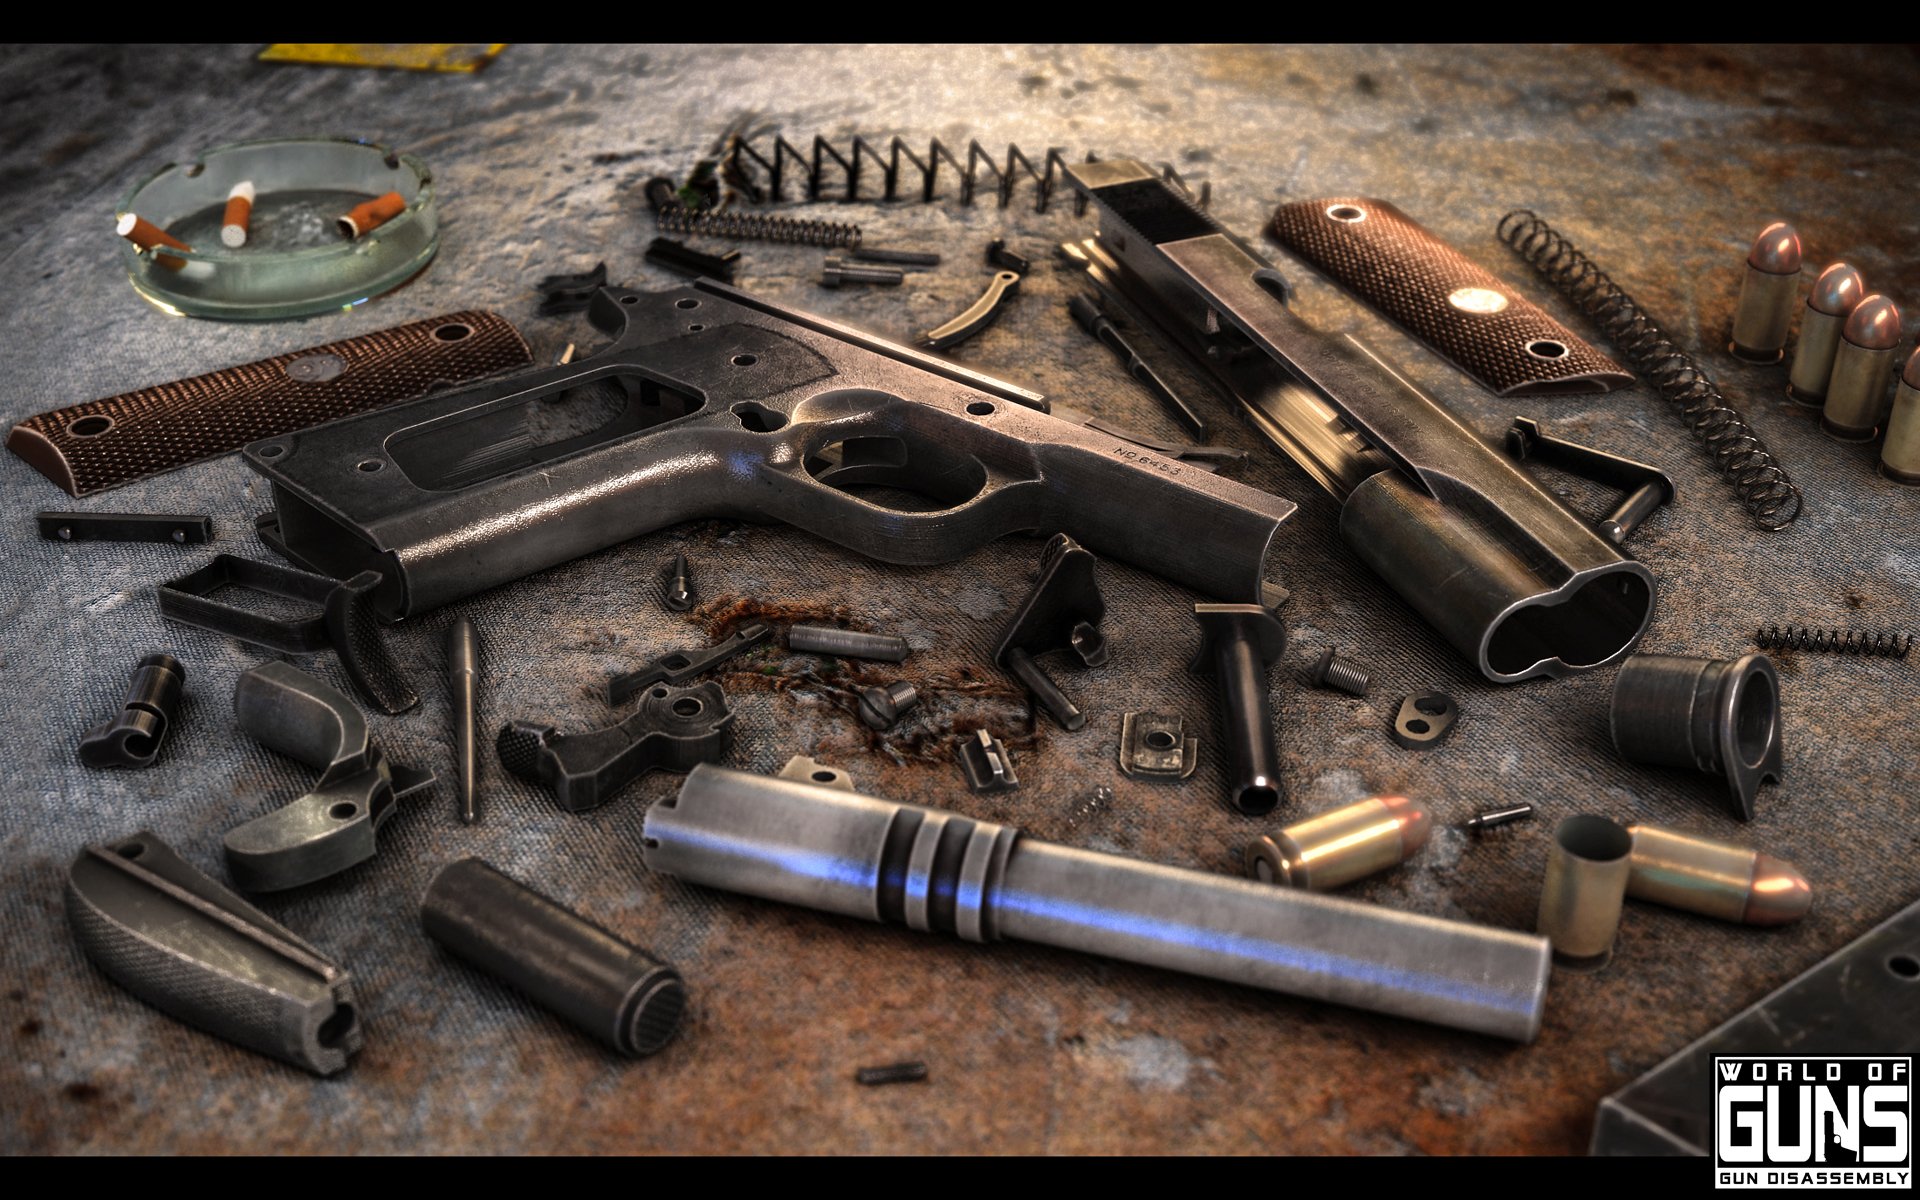 world of guns gun disassembly code